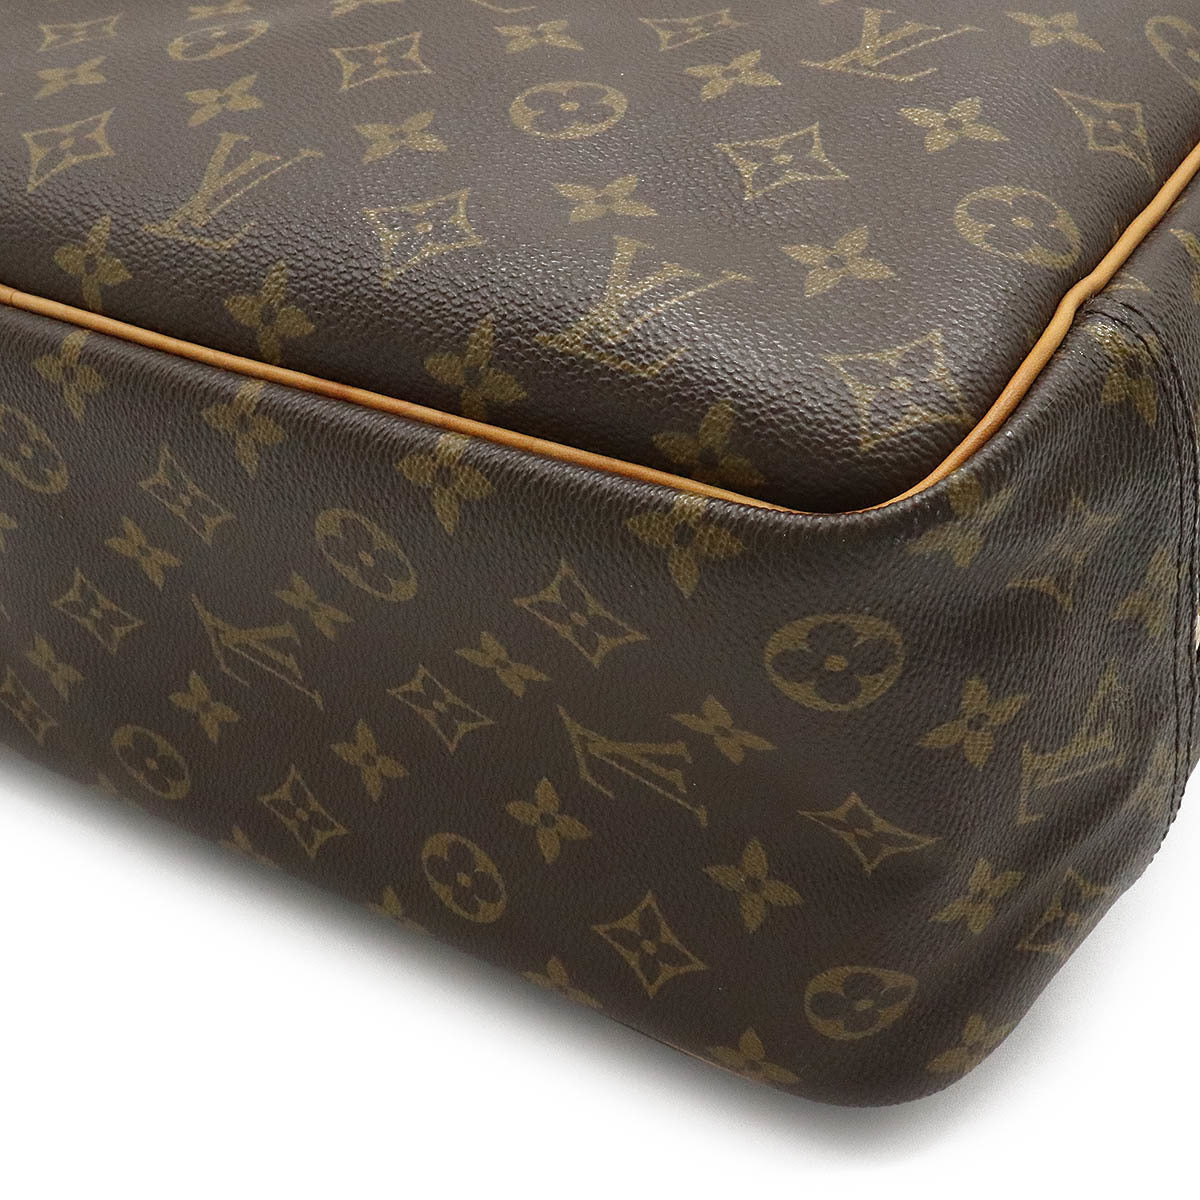 Louis Vuitton Deauville Handbag Mini Boston Bag M47270